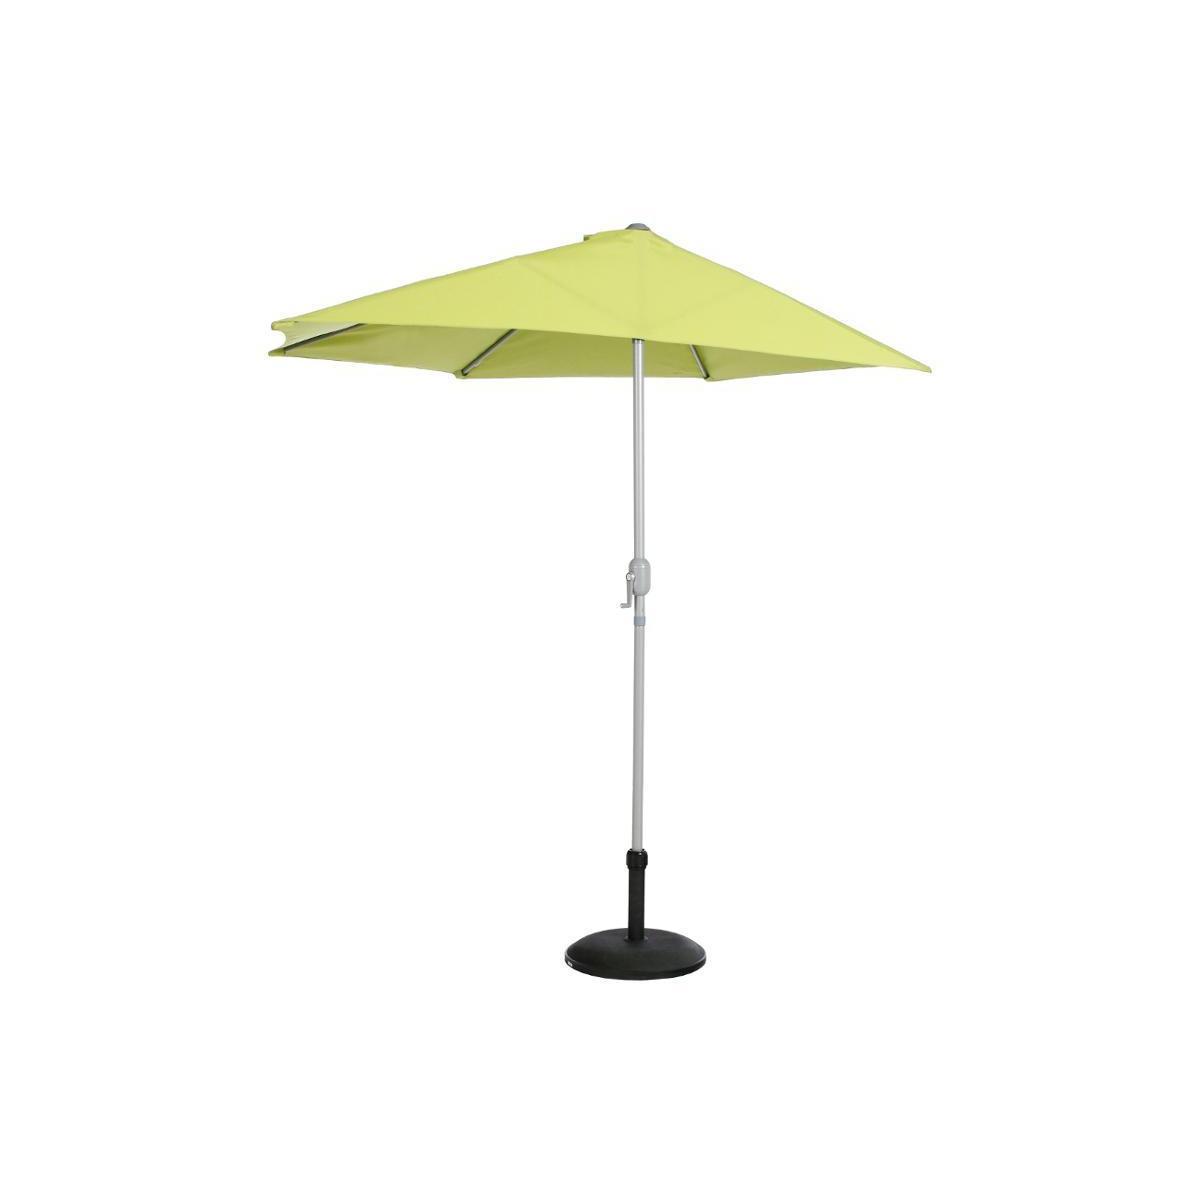 Demi-parasol Serena - ø 2.65 x H 2.35 cm - Vert pistache - HESPERIDE